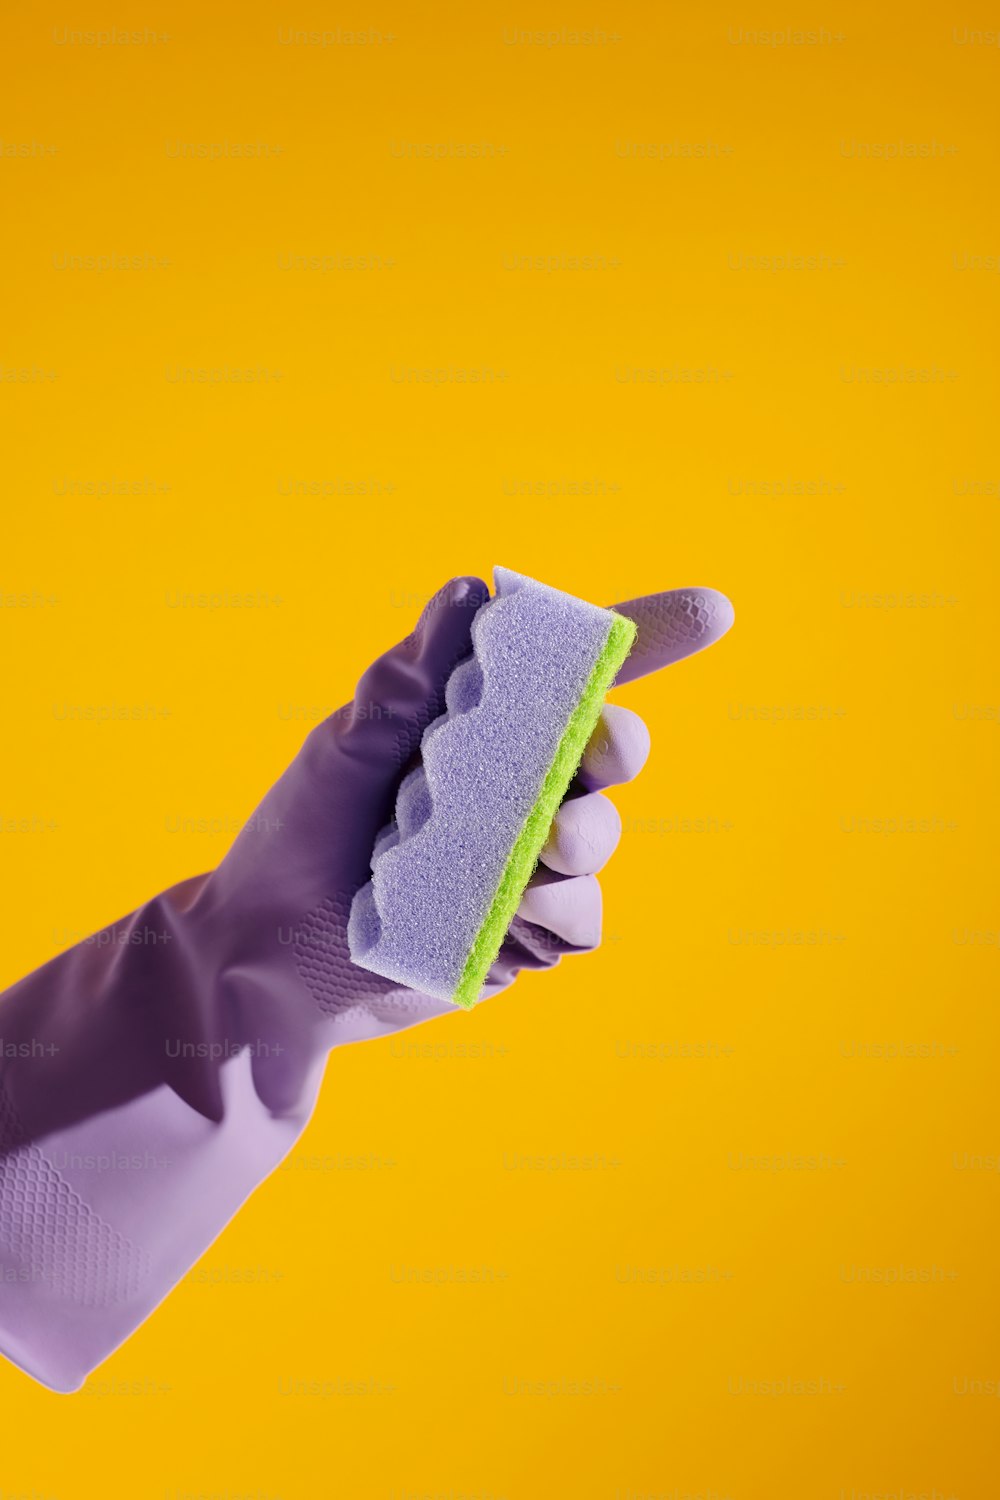 un guante púrpura sosteniendo una esponja sobre un fondo amarillo